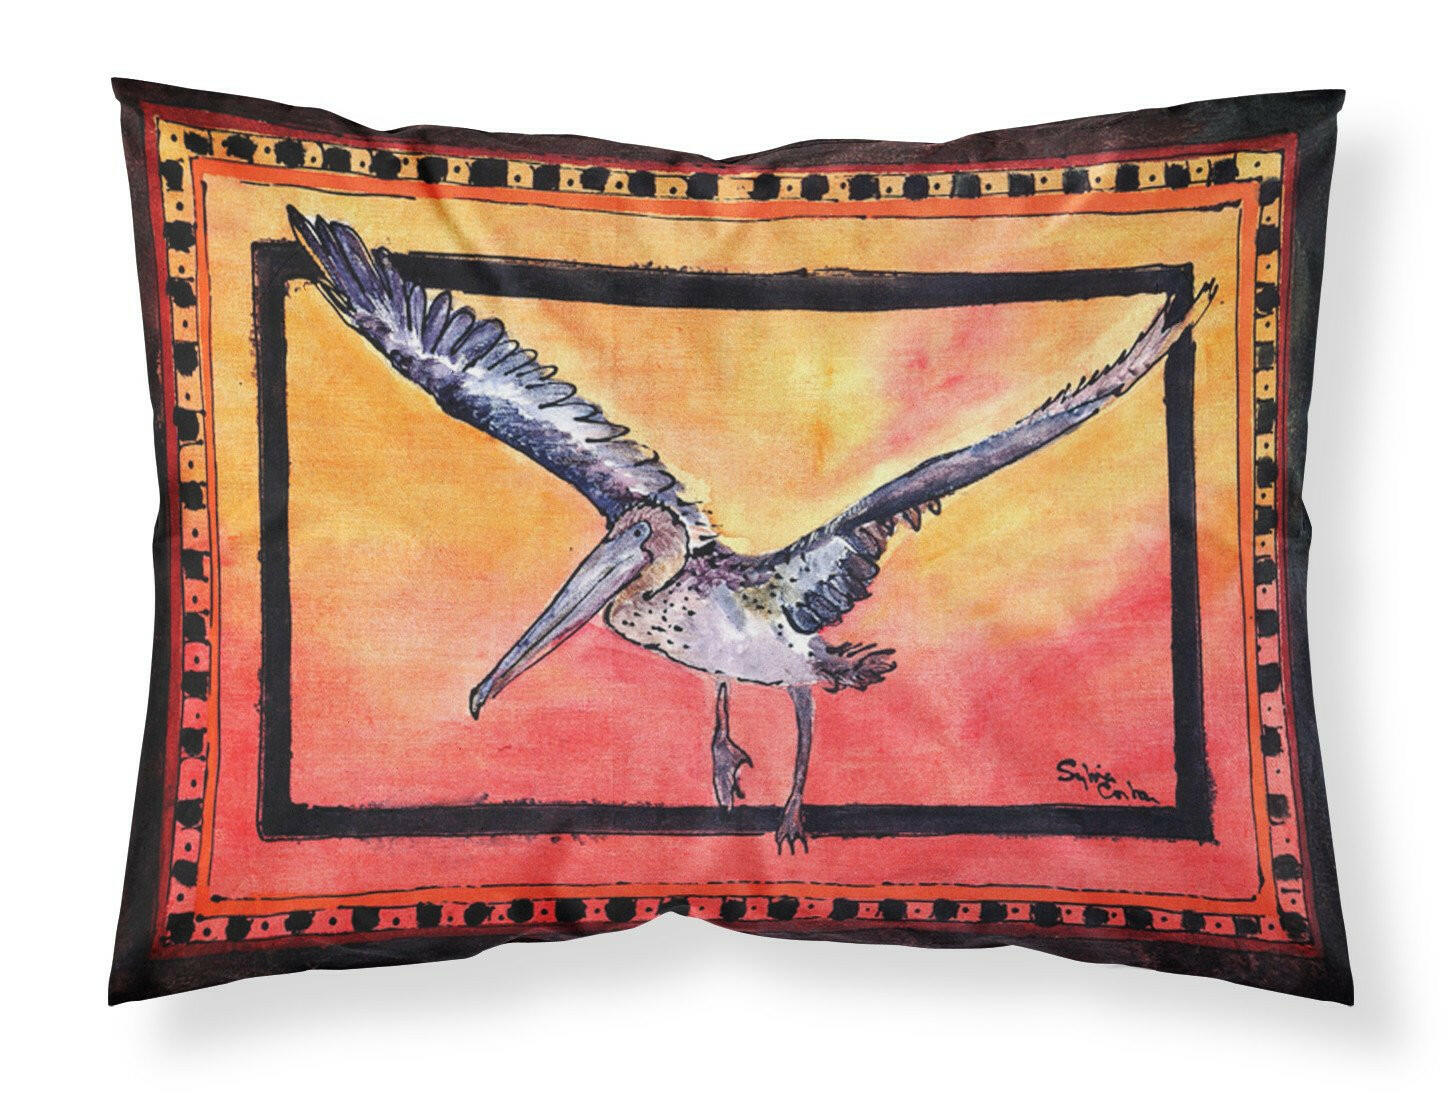 Bird - Pelican Moisture wicking Fabric standard pillowcase by Caroline's Treasures